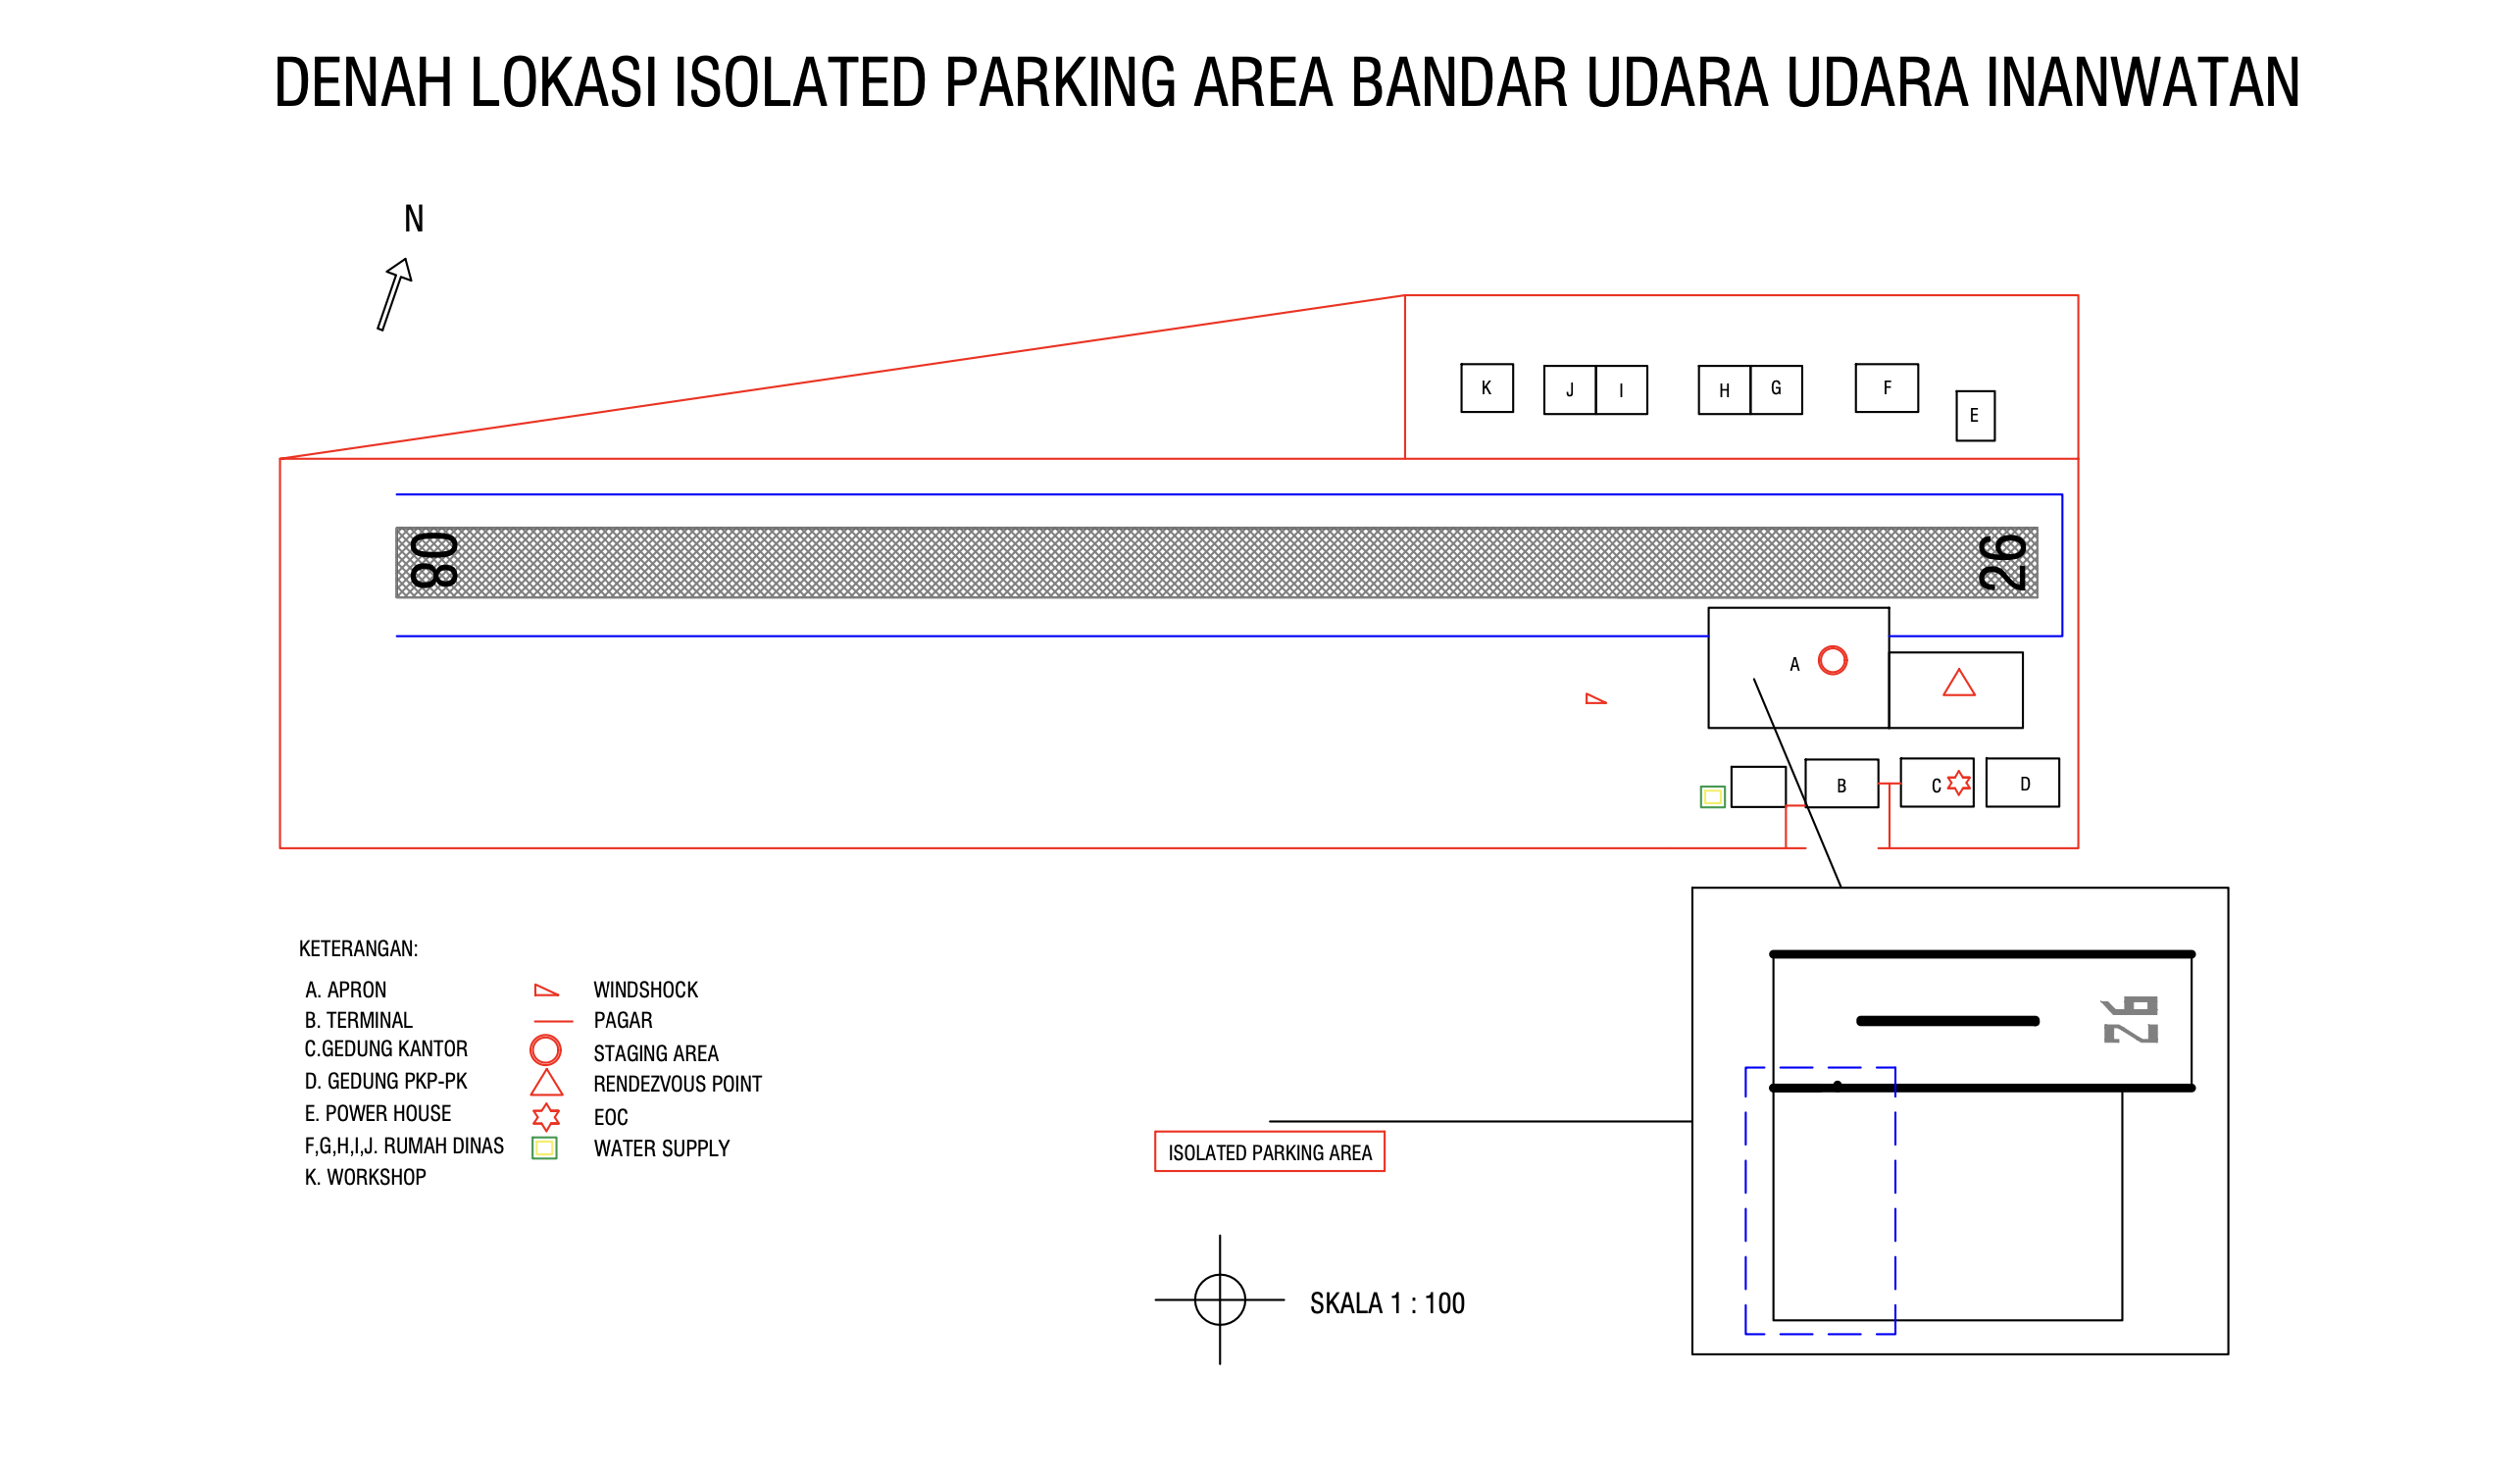 Gambar Peta Bandara Denah Lokasi Isolated Parking Area Bandar Udara Inanwatan